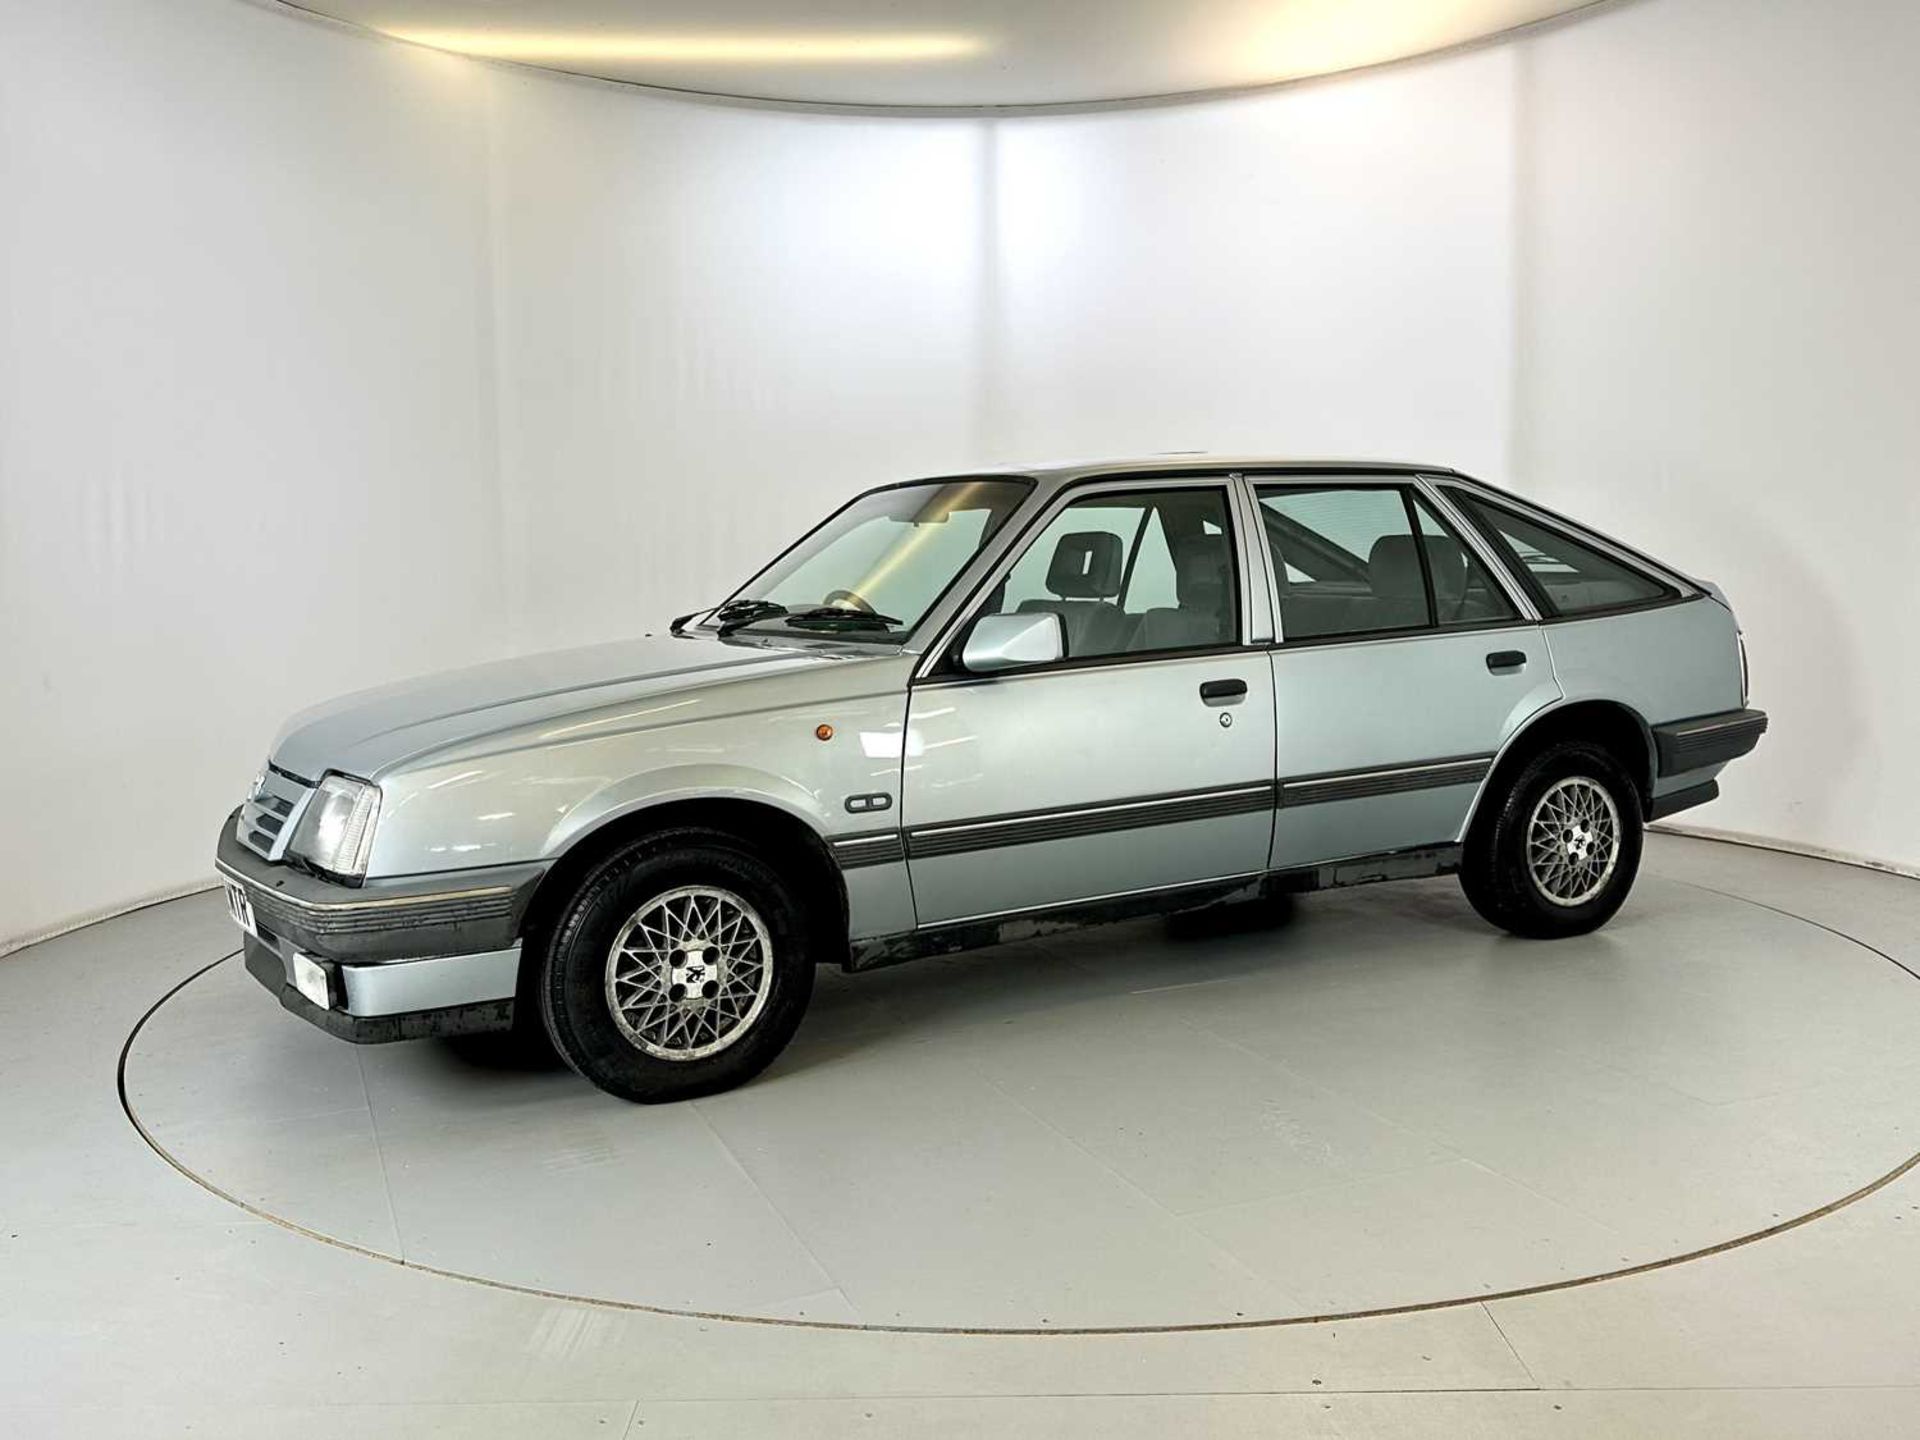 1988 Vauxhall Cavalier - Image 4 of 34